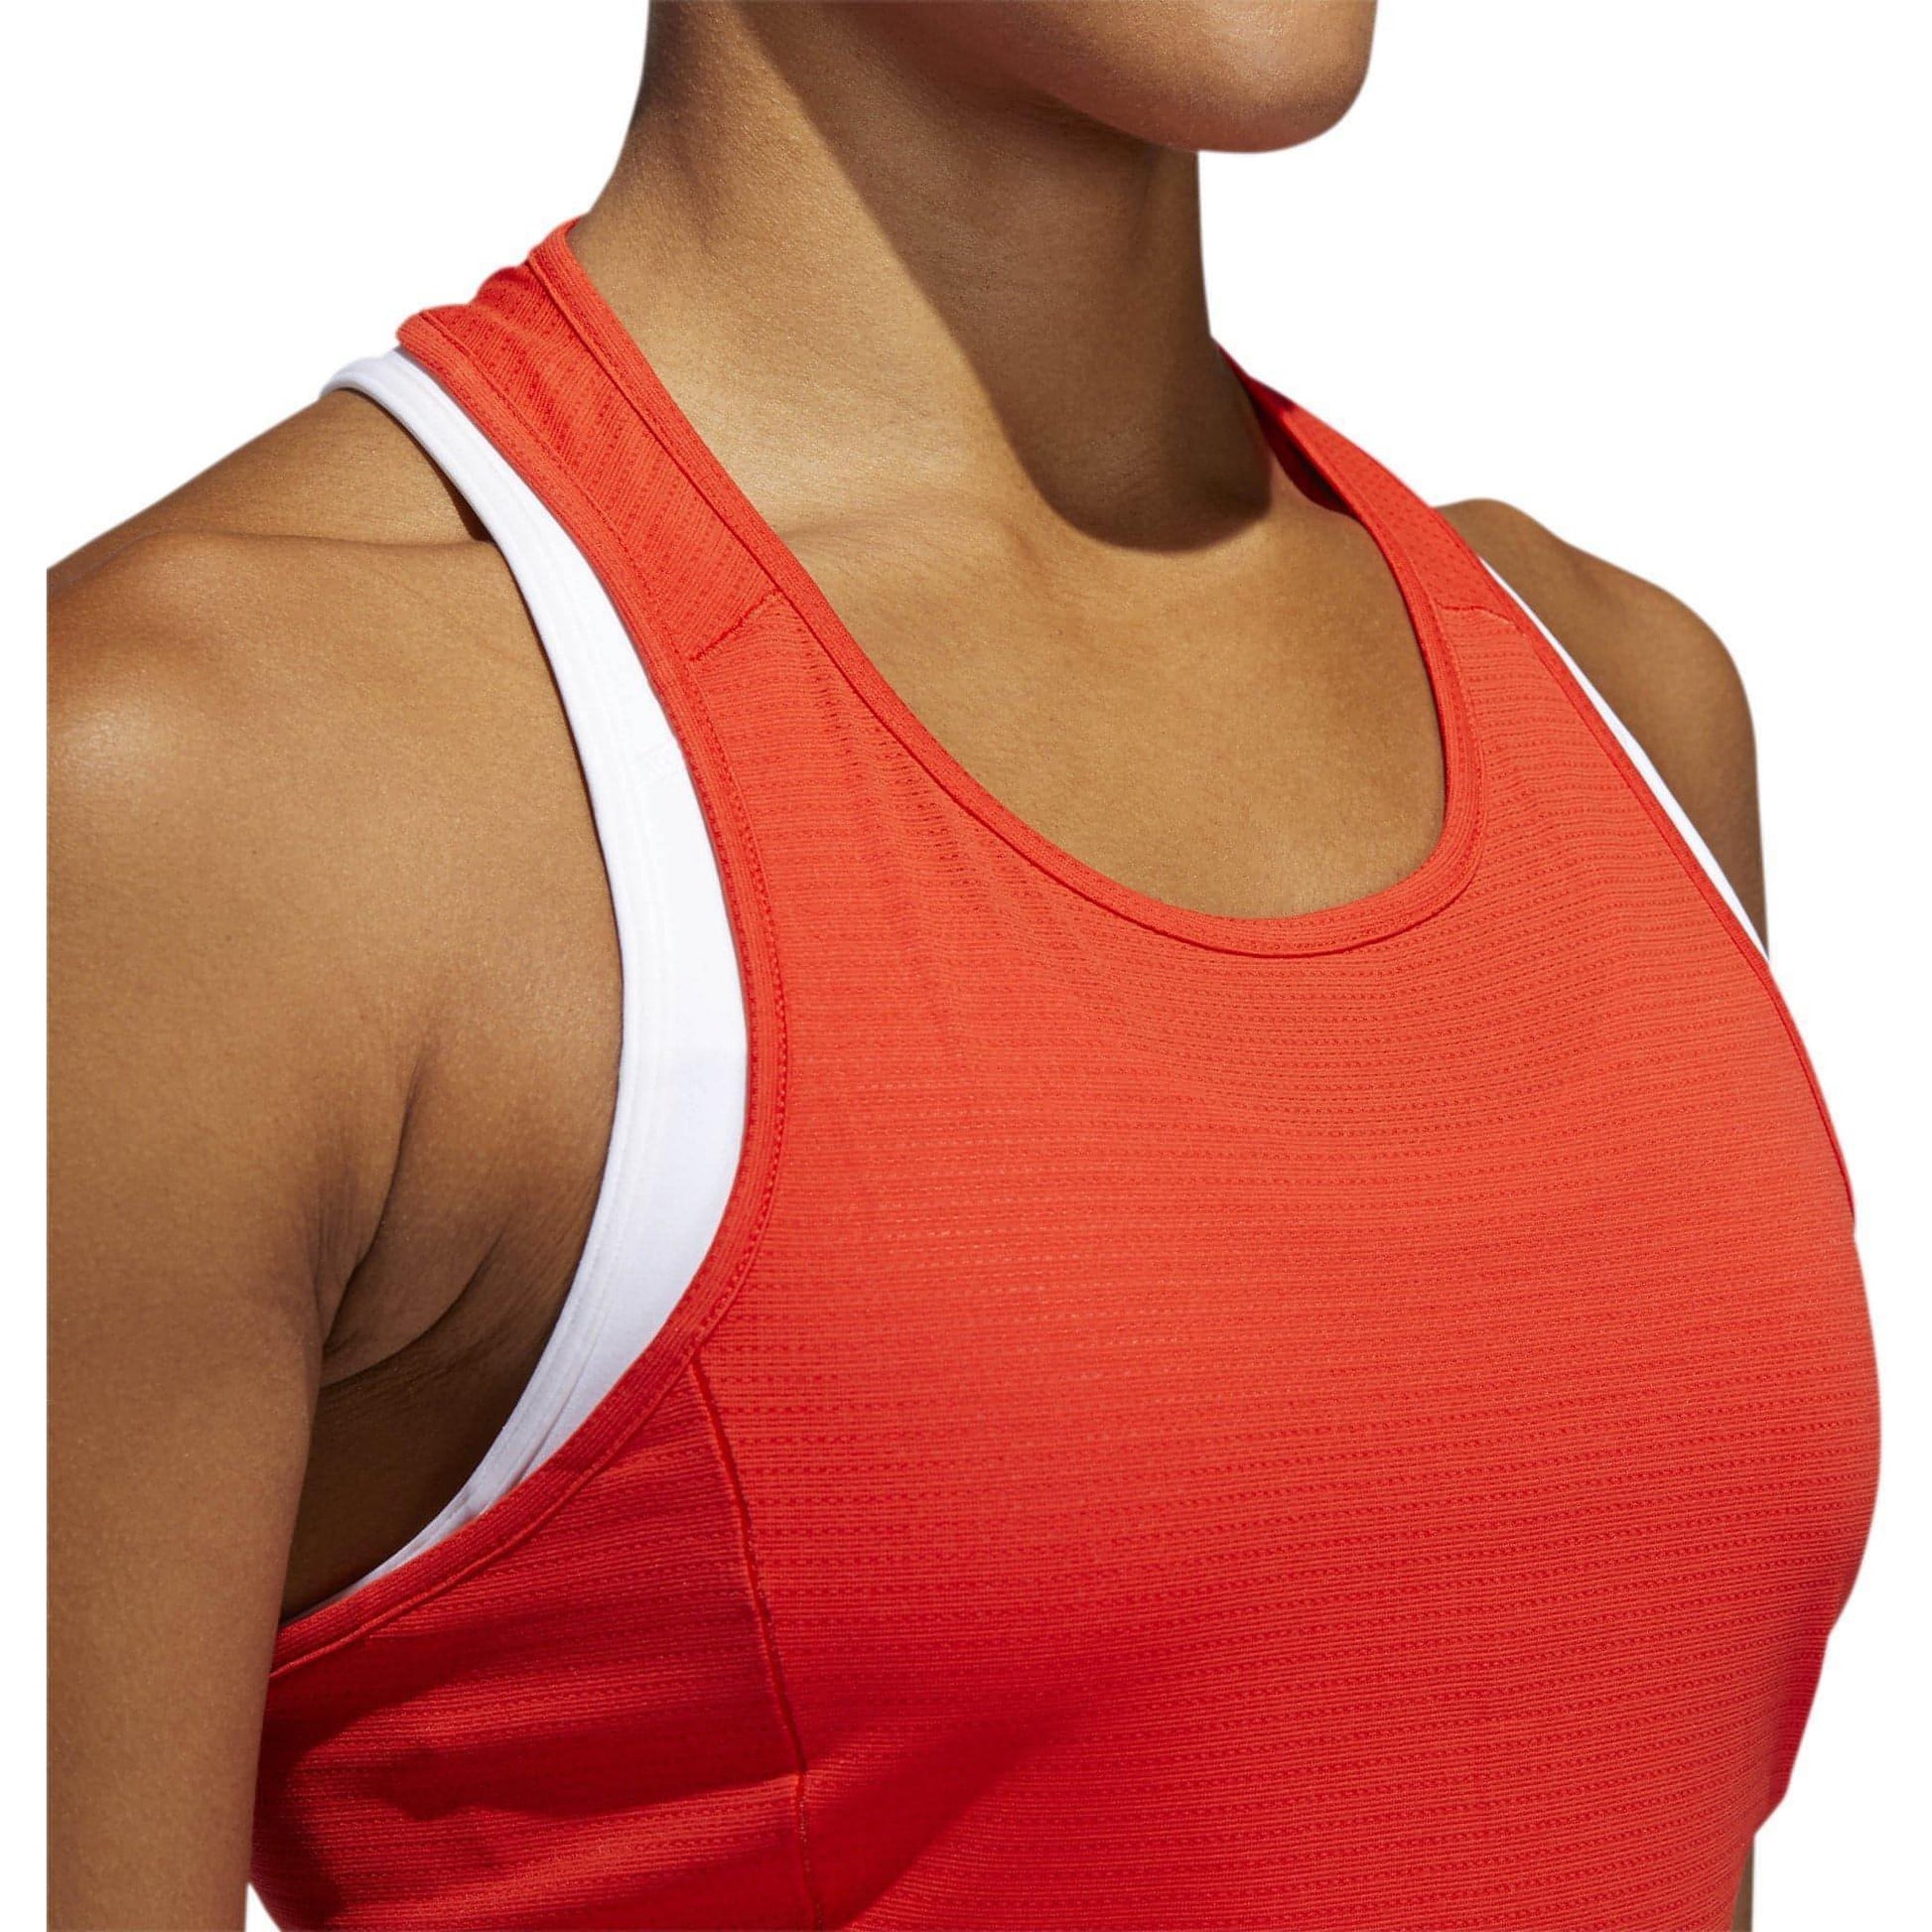 adidas Supernova Womens Running Vest Tank Top - Red - Start Fitness